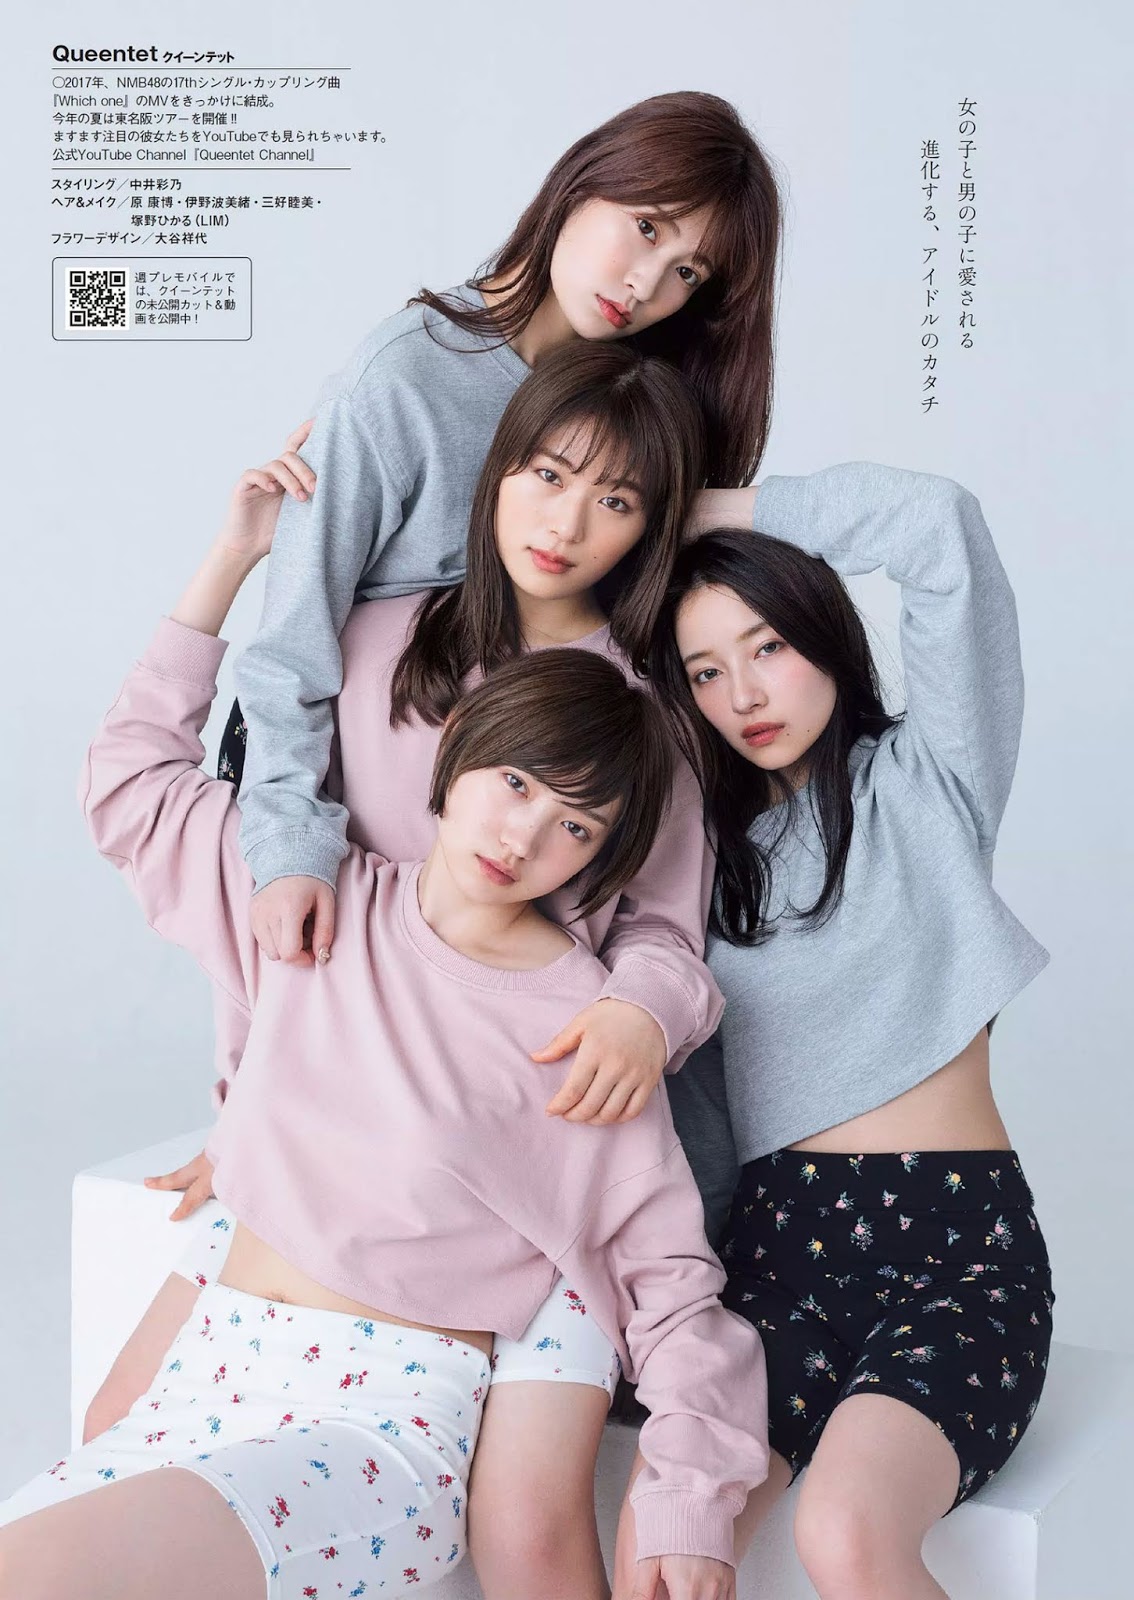 NMB48 Queentet, Weekly Playboy 2019 No.36 (週刊プレイボーイ 2019年36号)